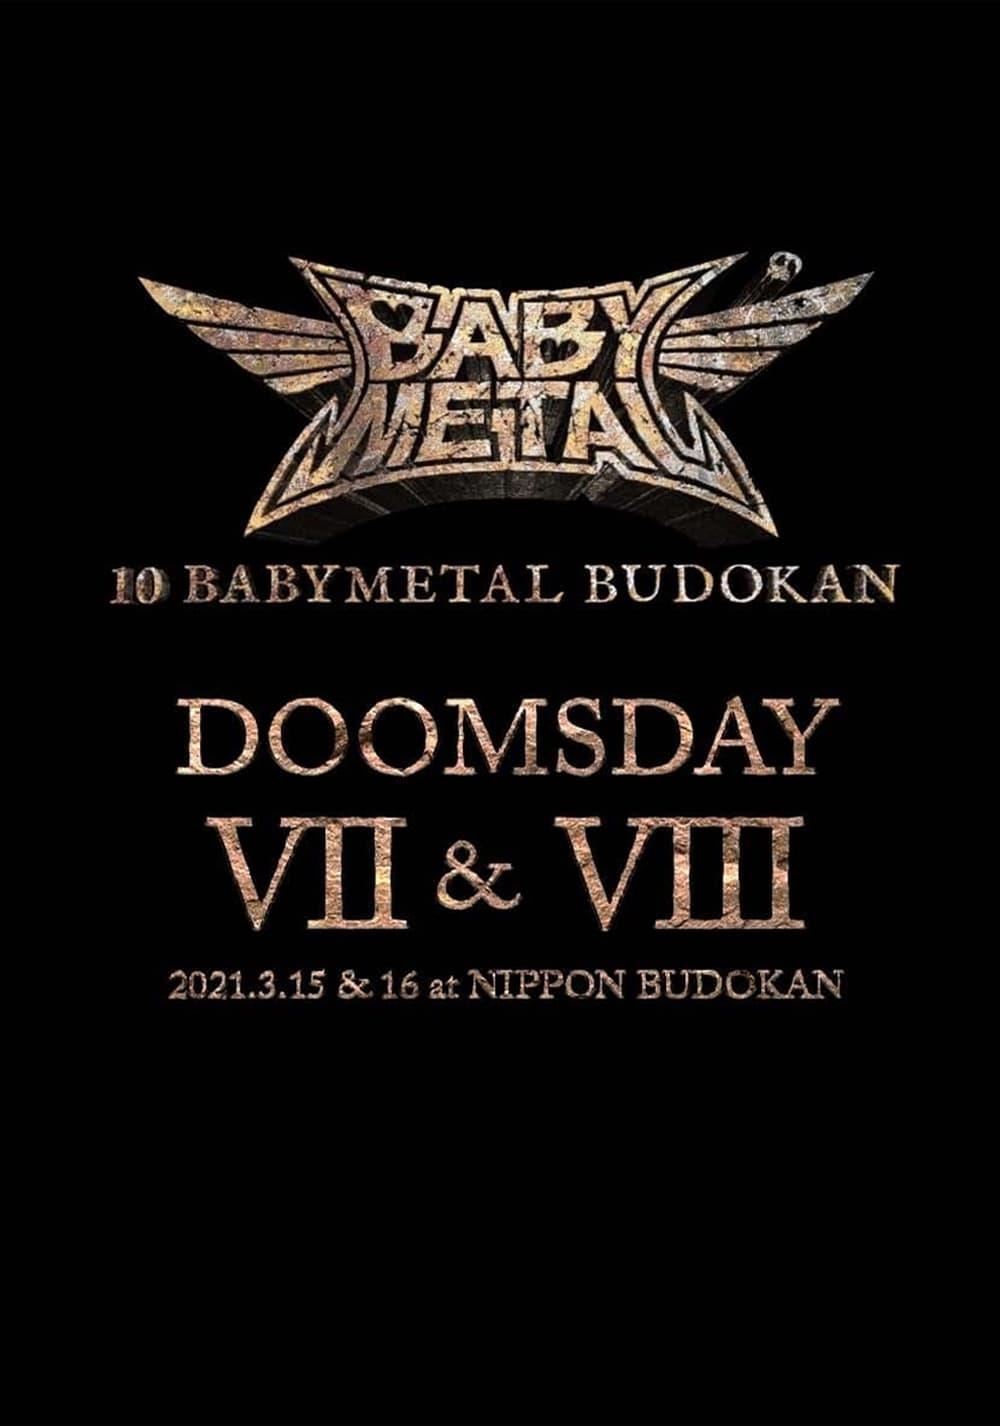 10 BABYMETAL BUDOKAN - DOOMSDAY VII & VIII poster